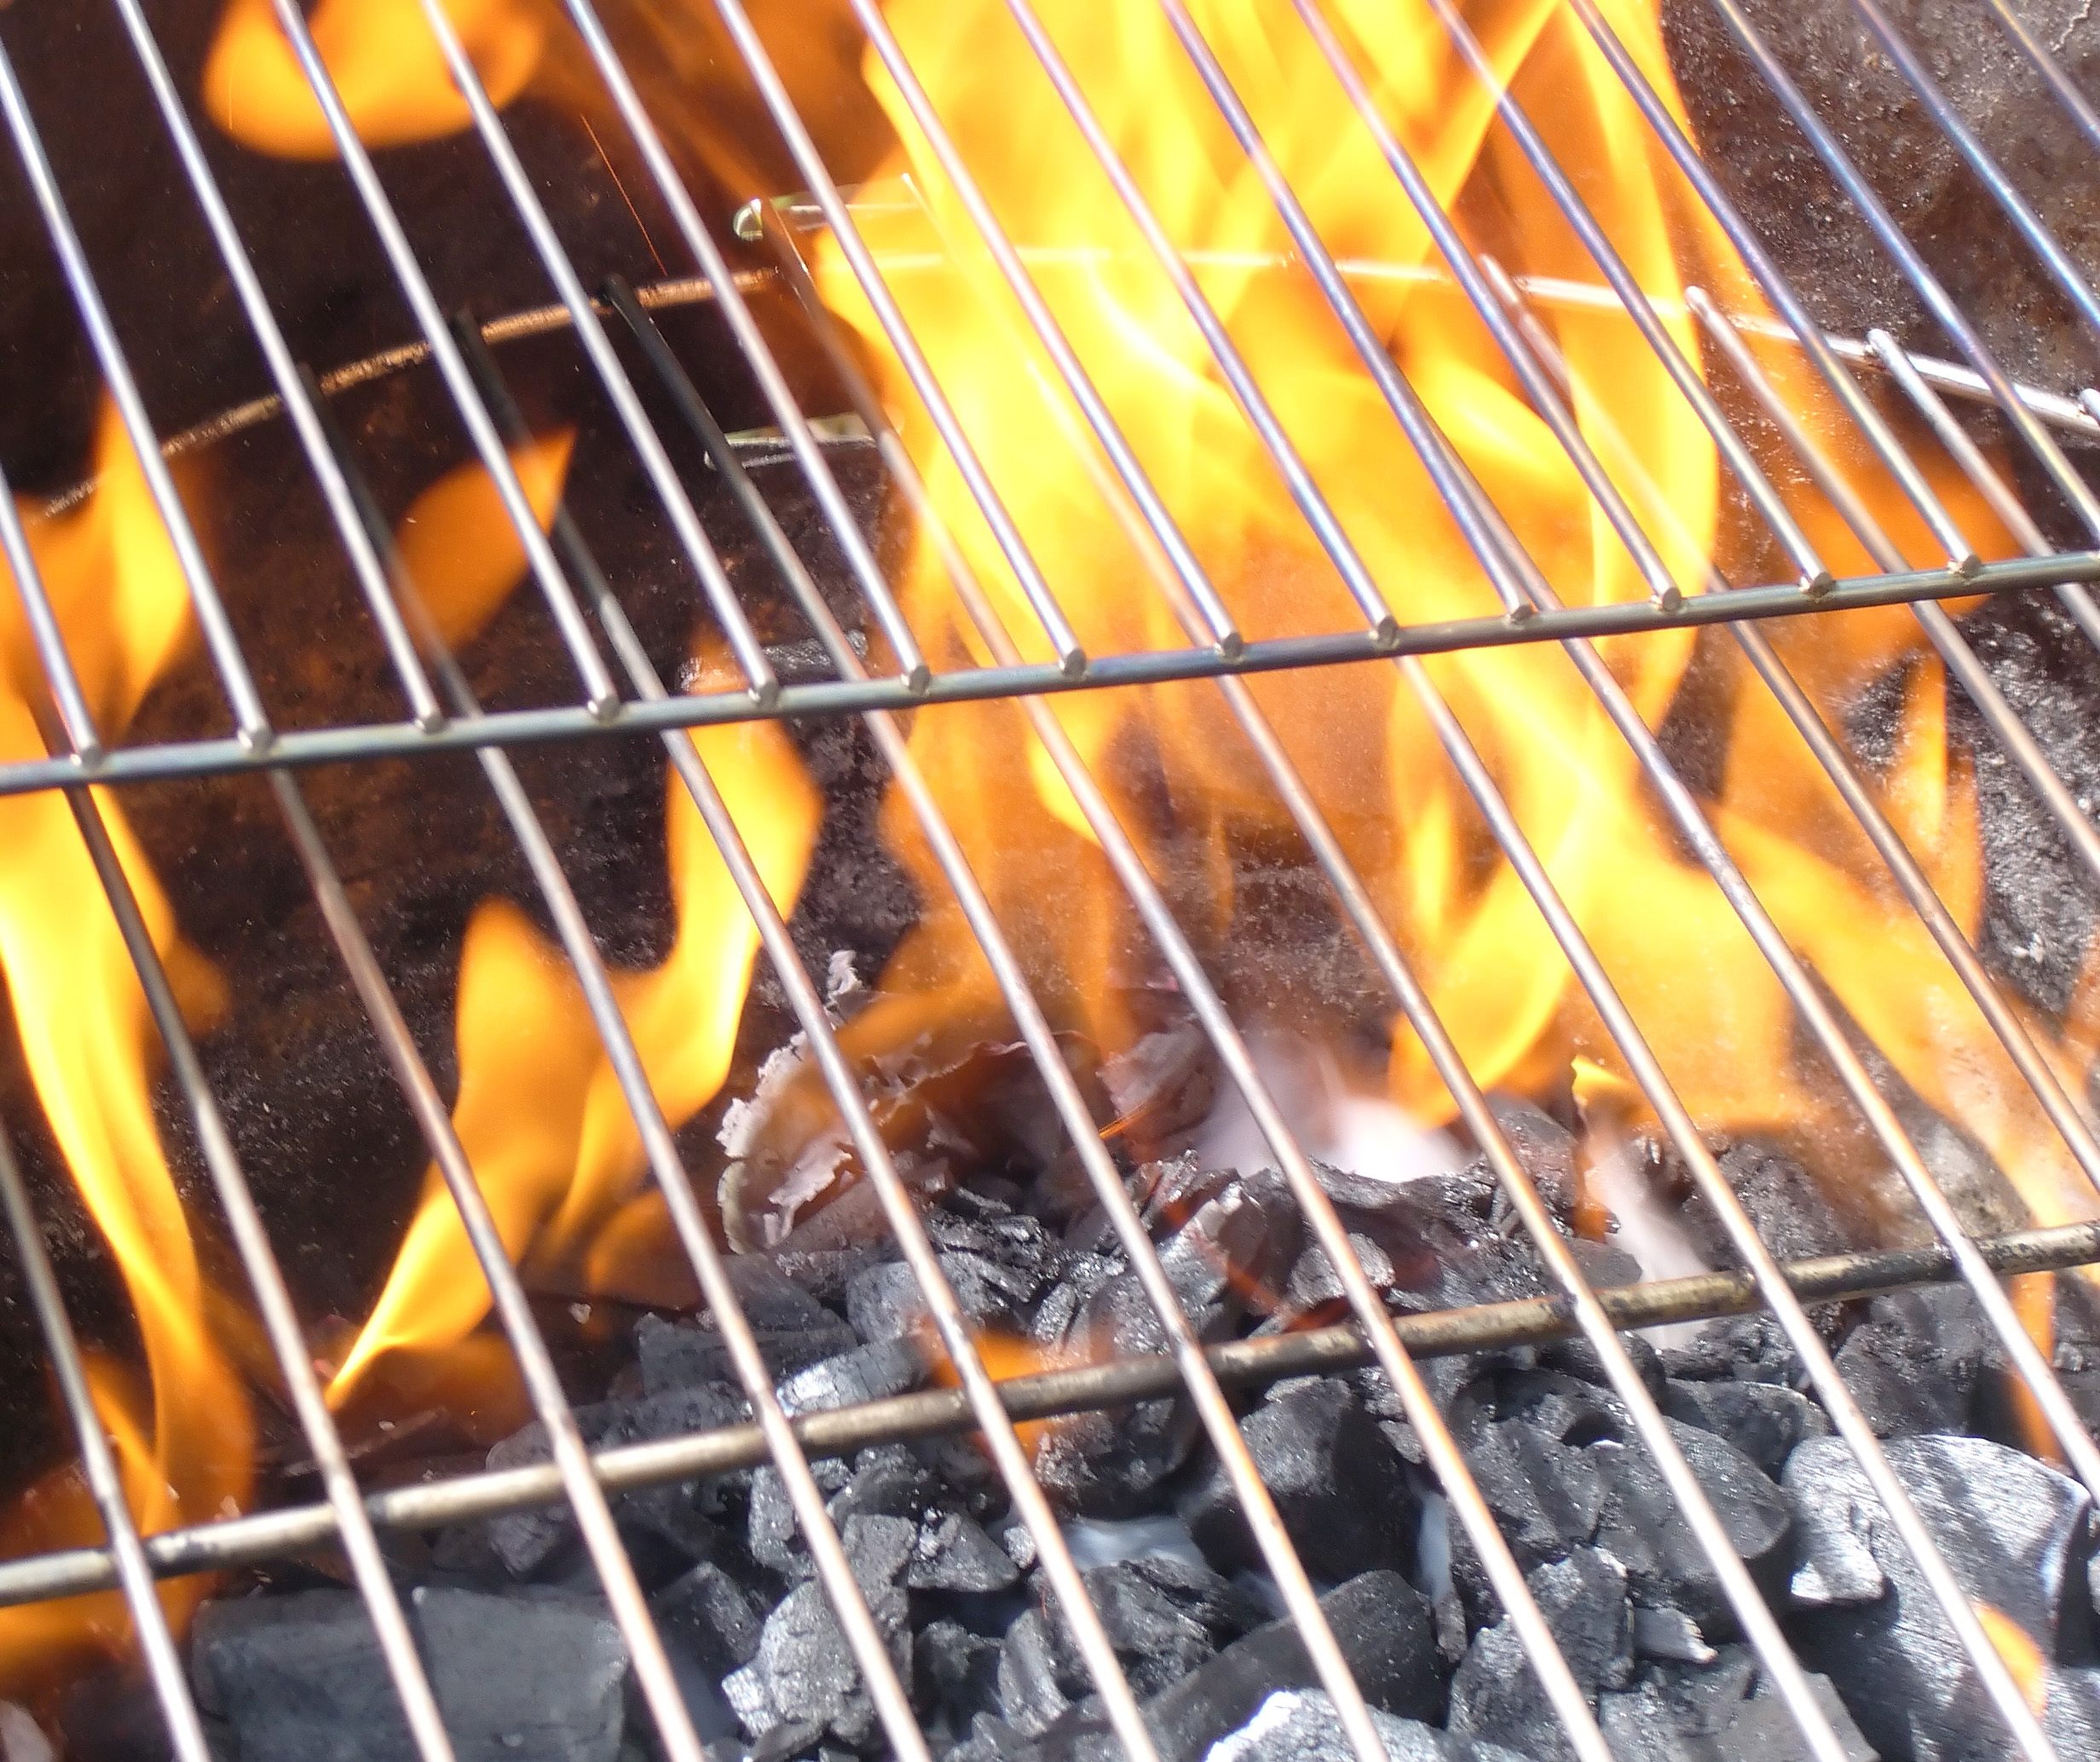 Barbecue Basics | Home & Family